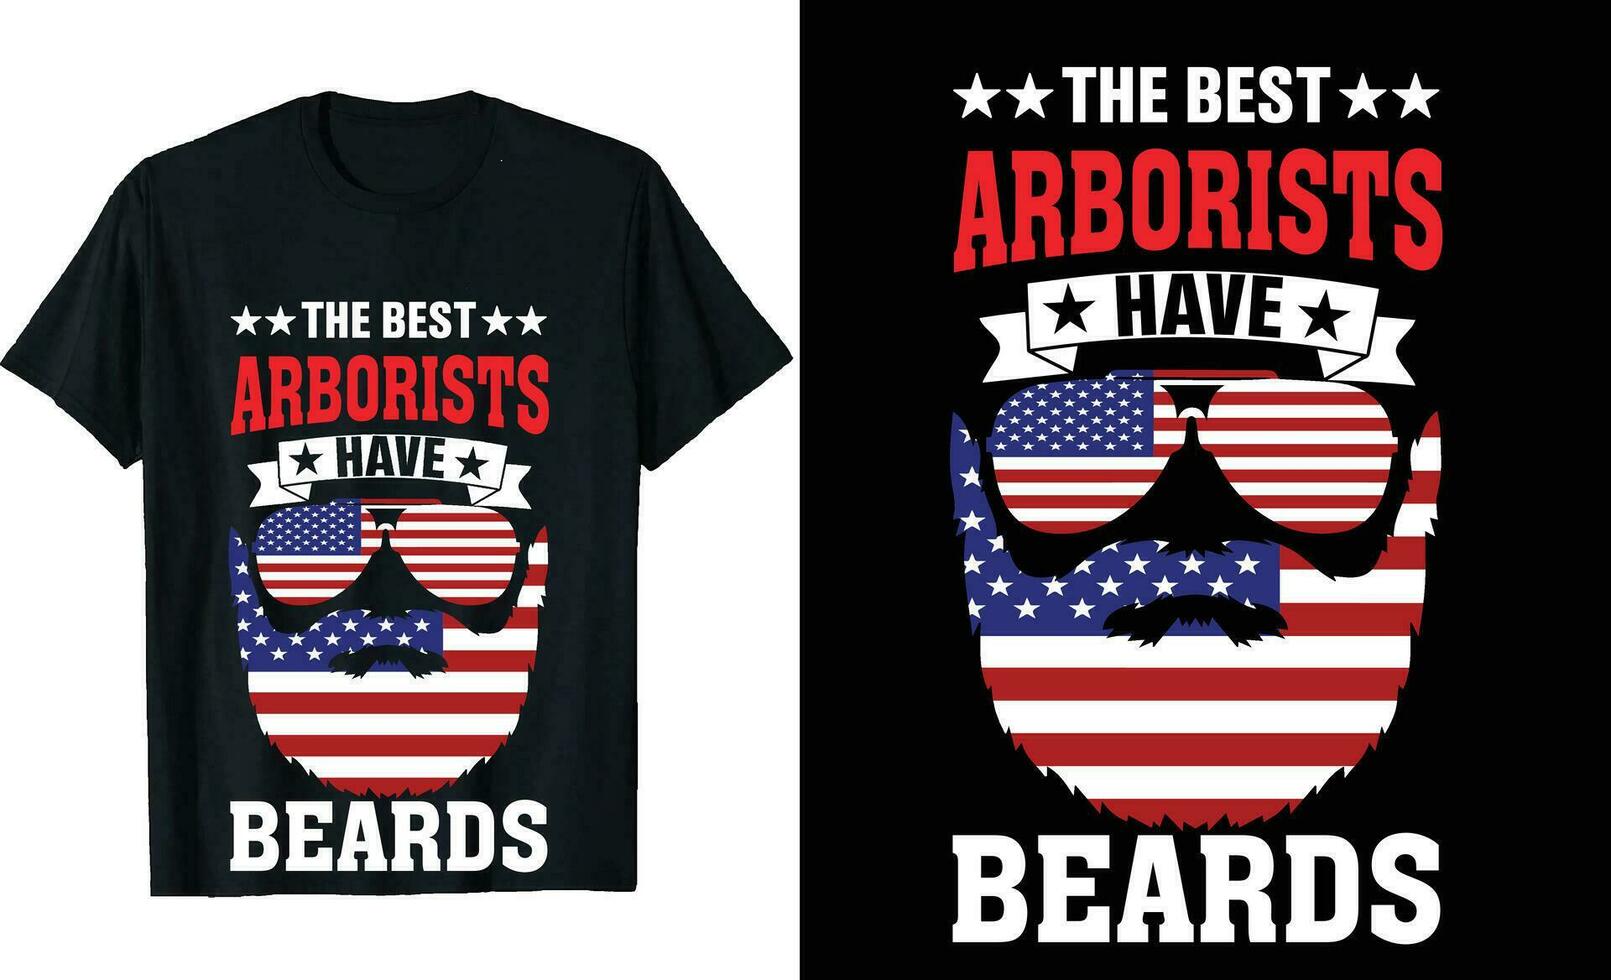 The Best Arborists Have Beards t shirt design vector